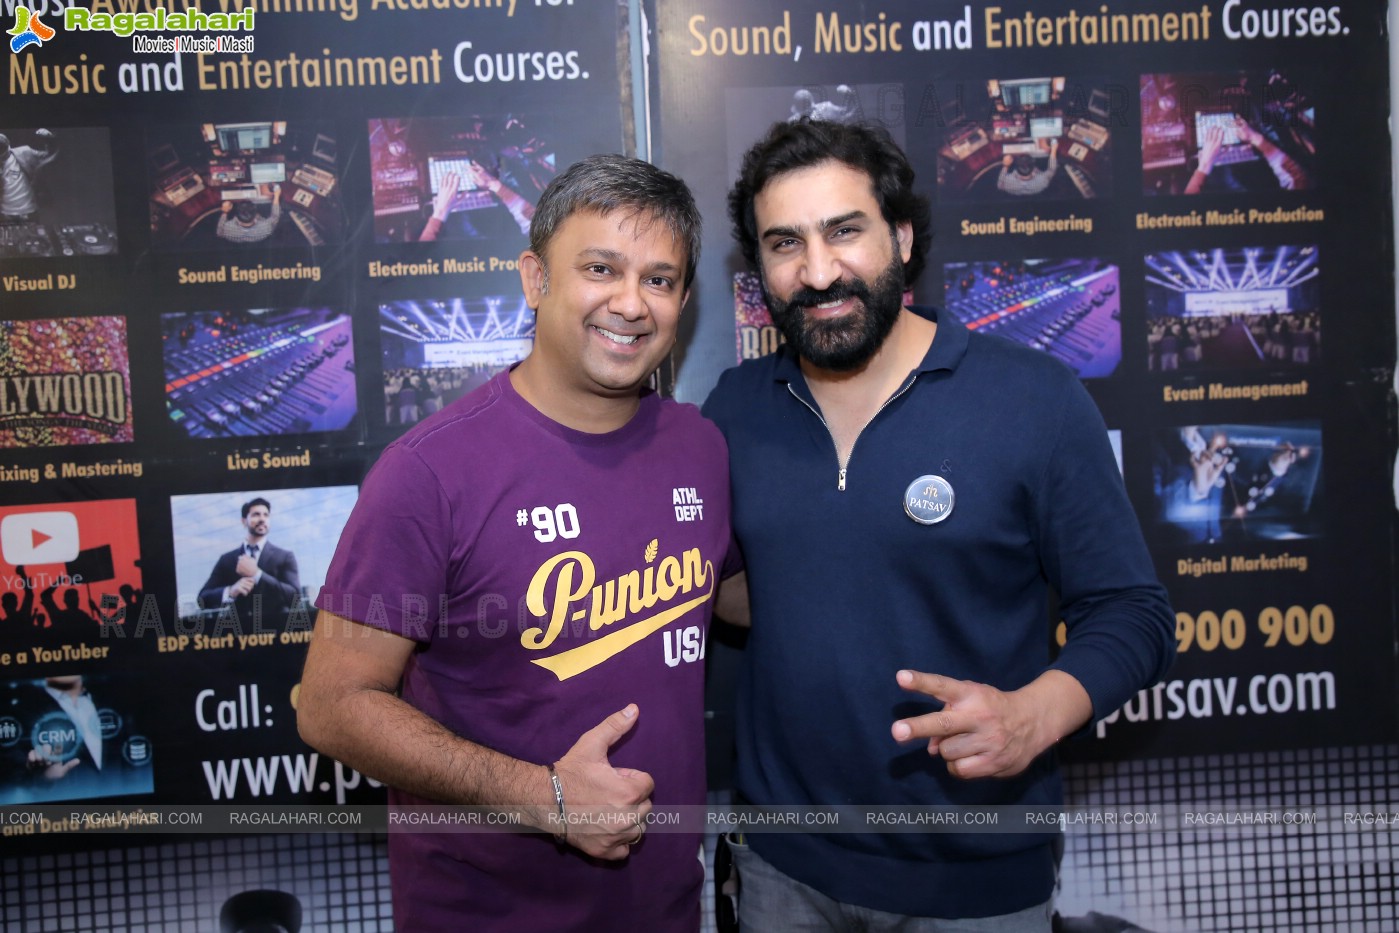 Patsav DJ Academy's DJ Masterclass 2022 in Hyderabad